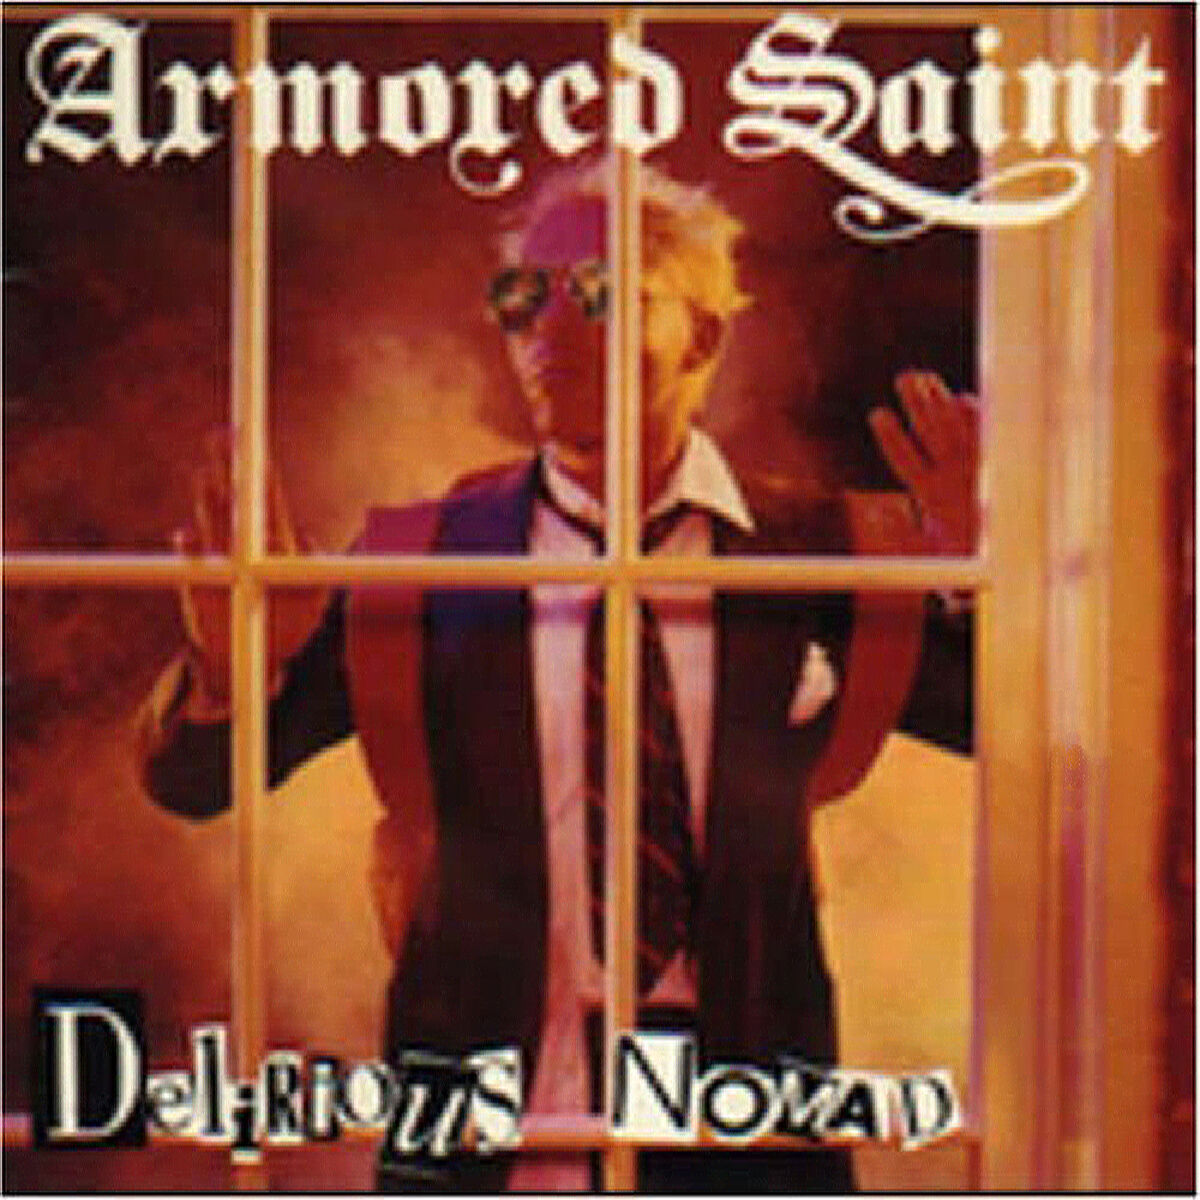 Armored Saint: albums, songs, playlists | Listen on Deezer